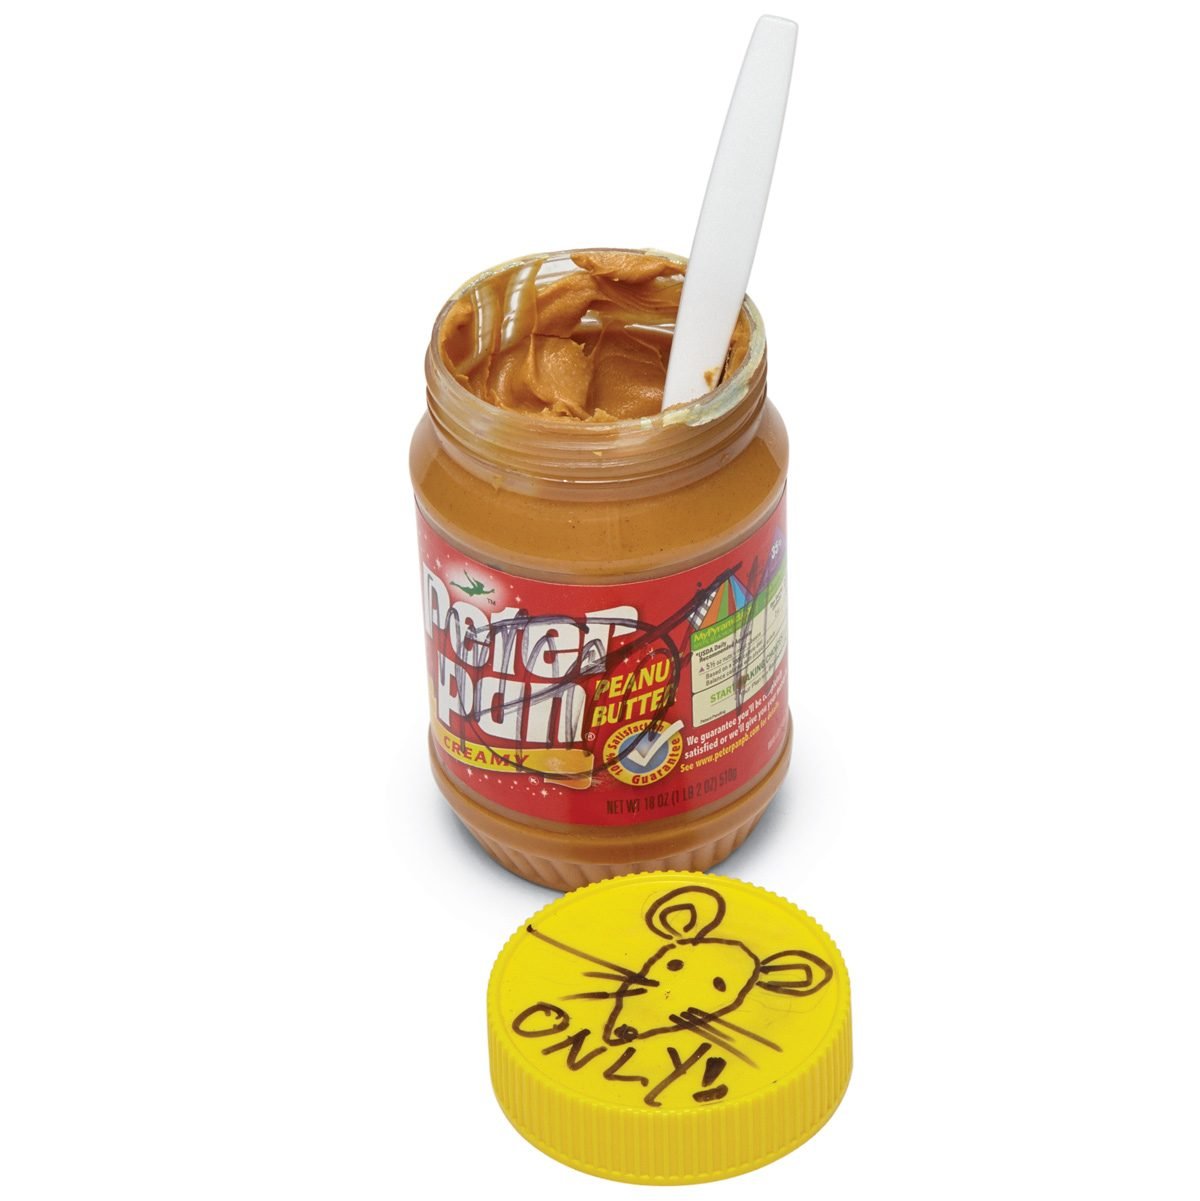 Peanut Butter is the Best Mouse Trap Bait